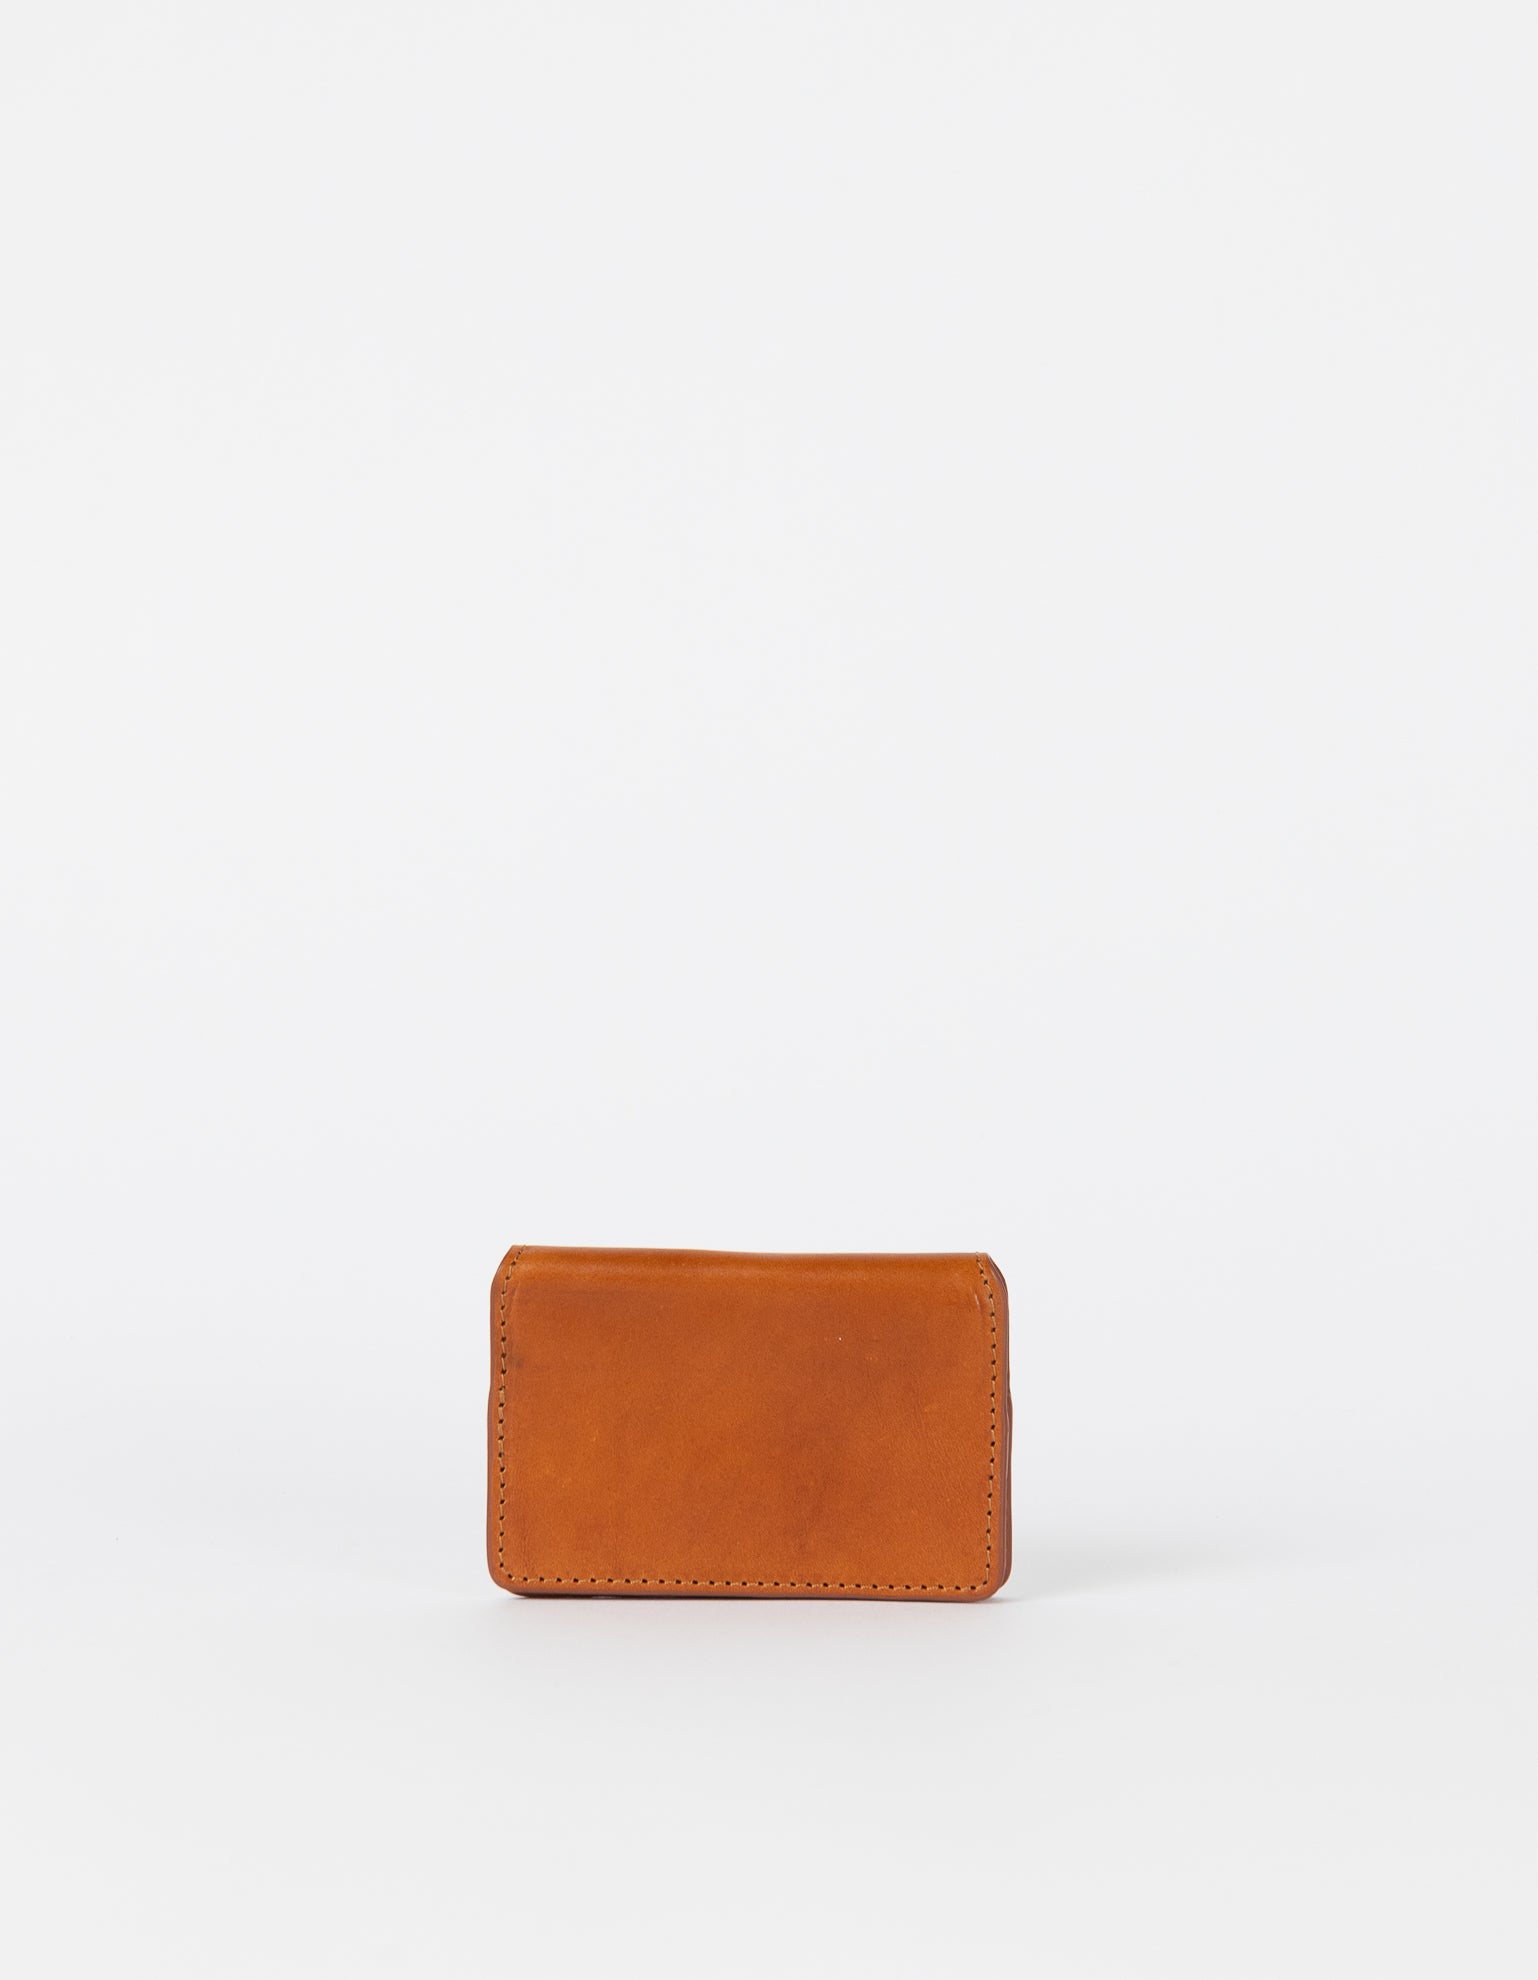 Small Cognac card case. Square shape. Back image